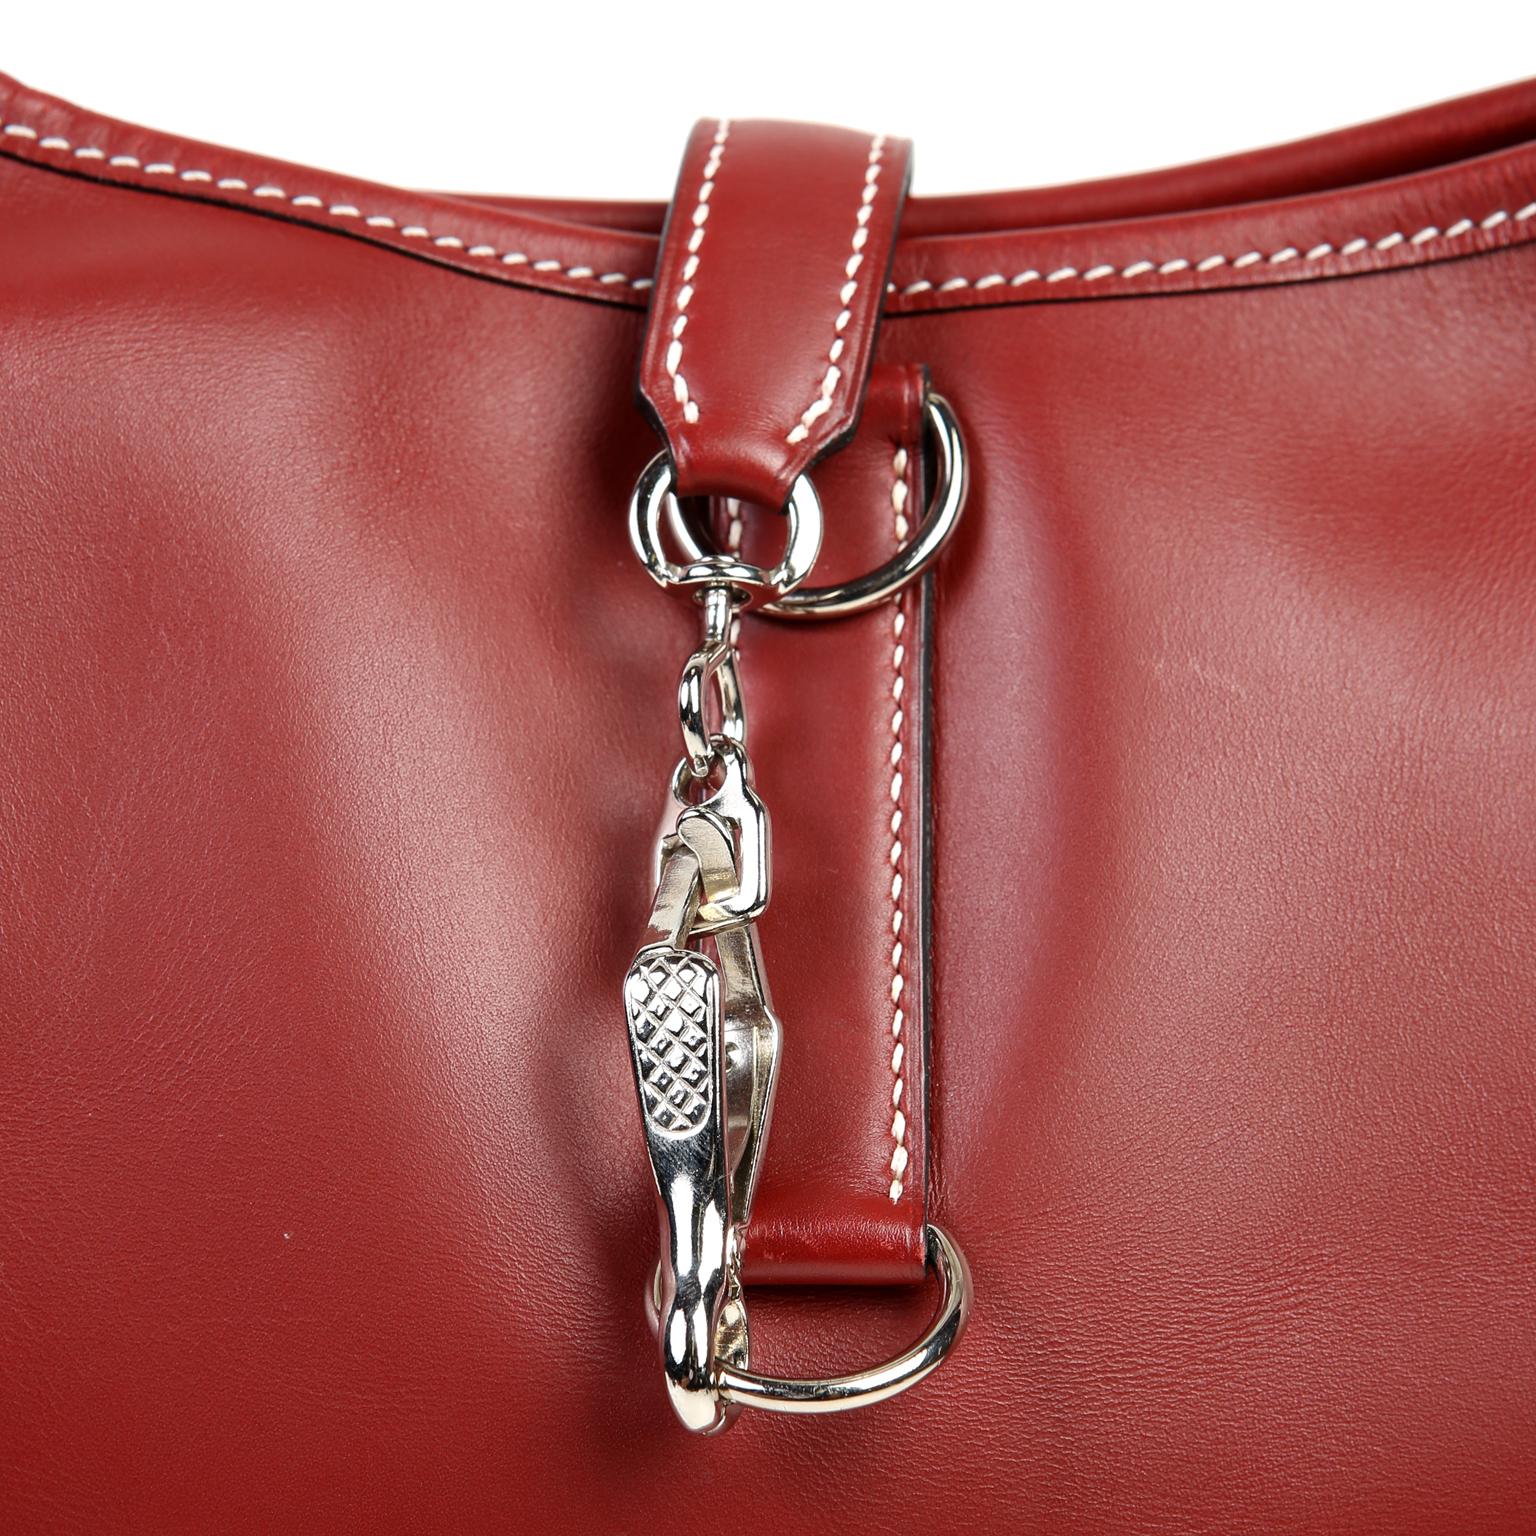 Women's Hermès Burgundy Leather 31 cm Trim Bag